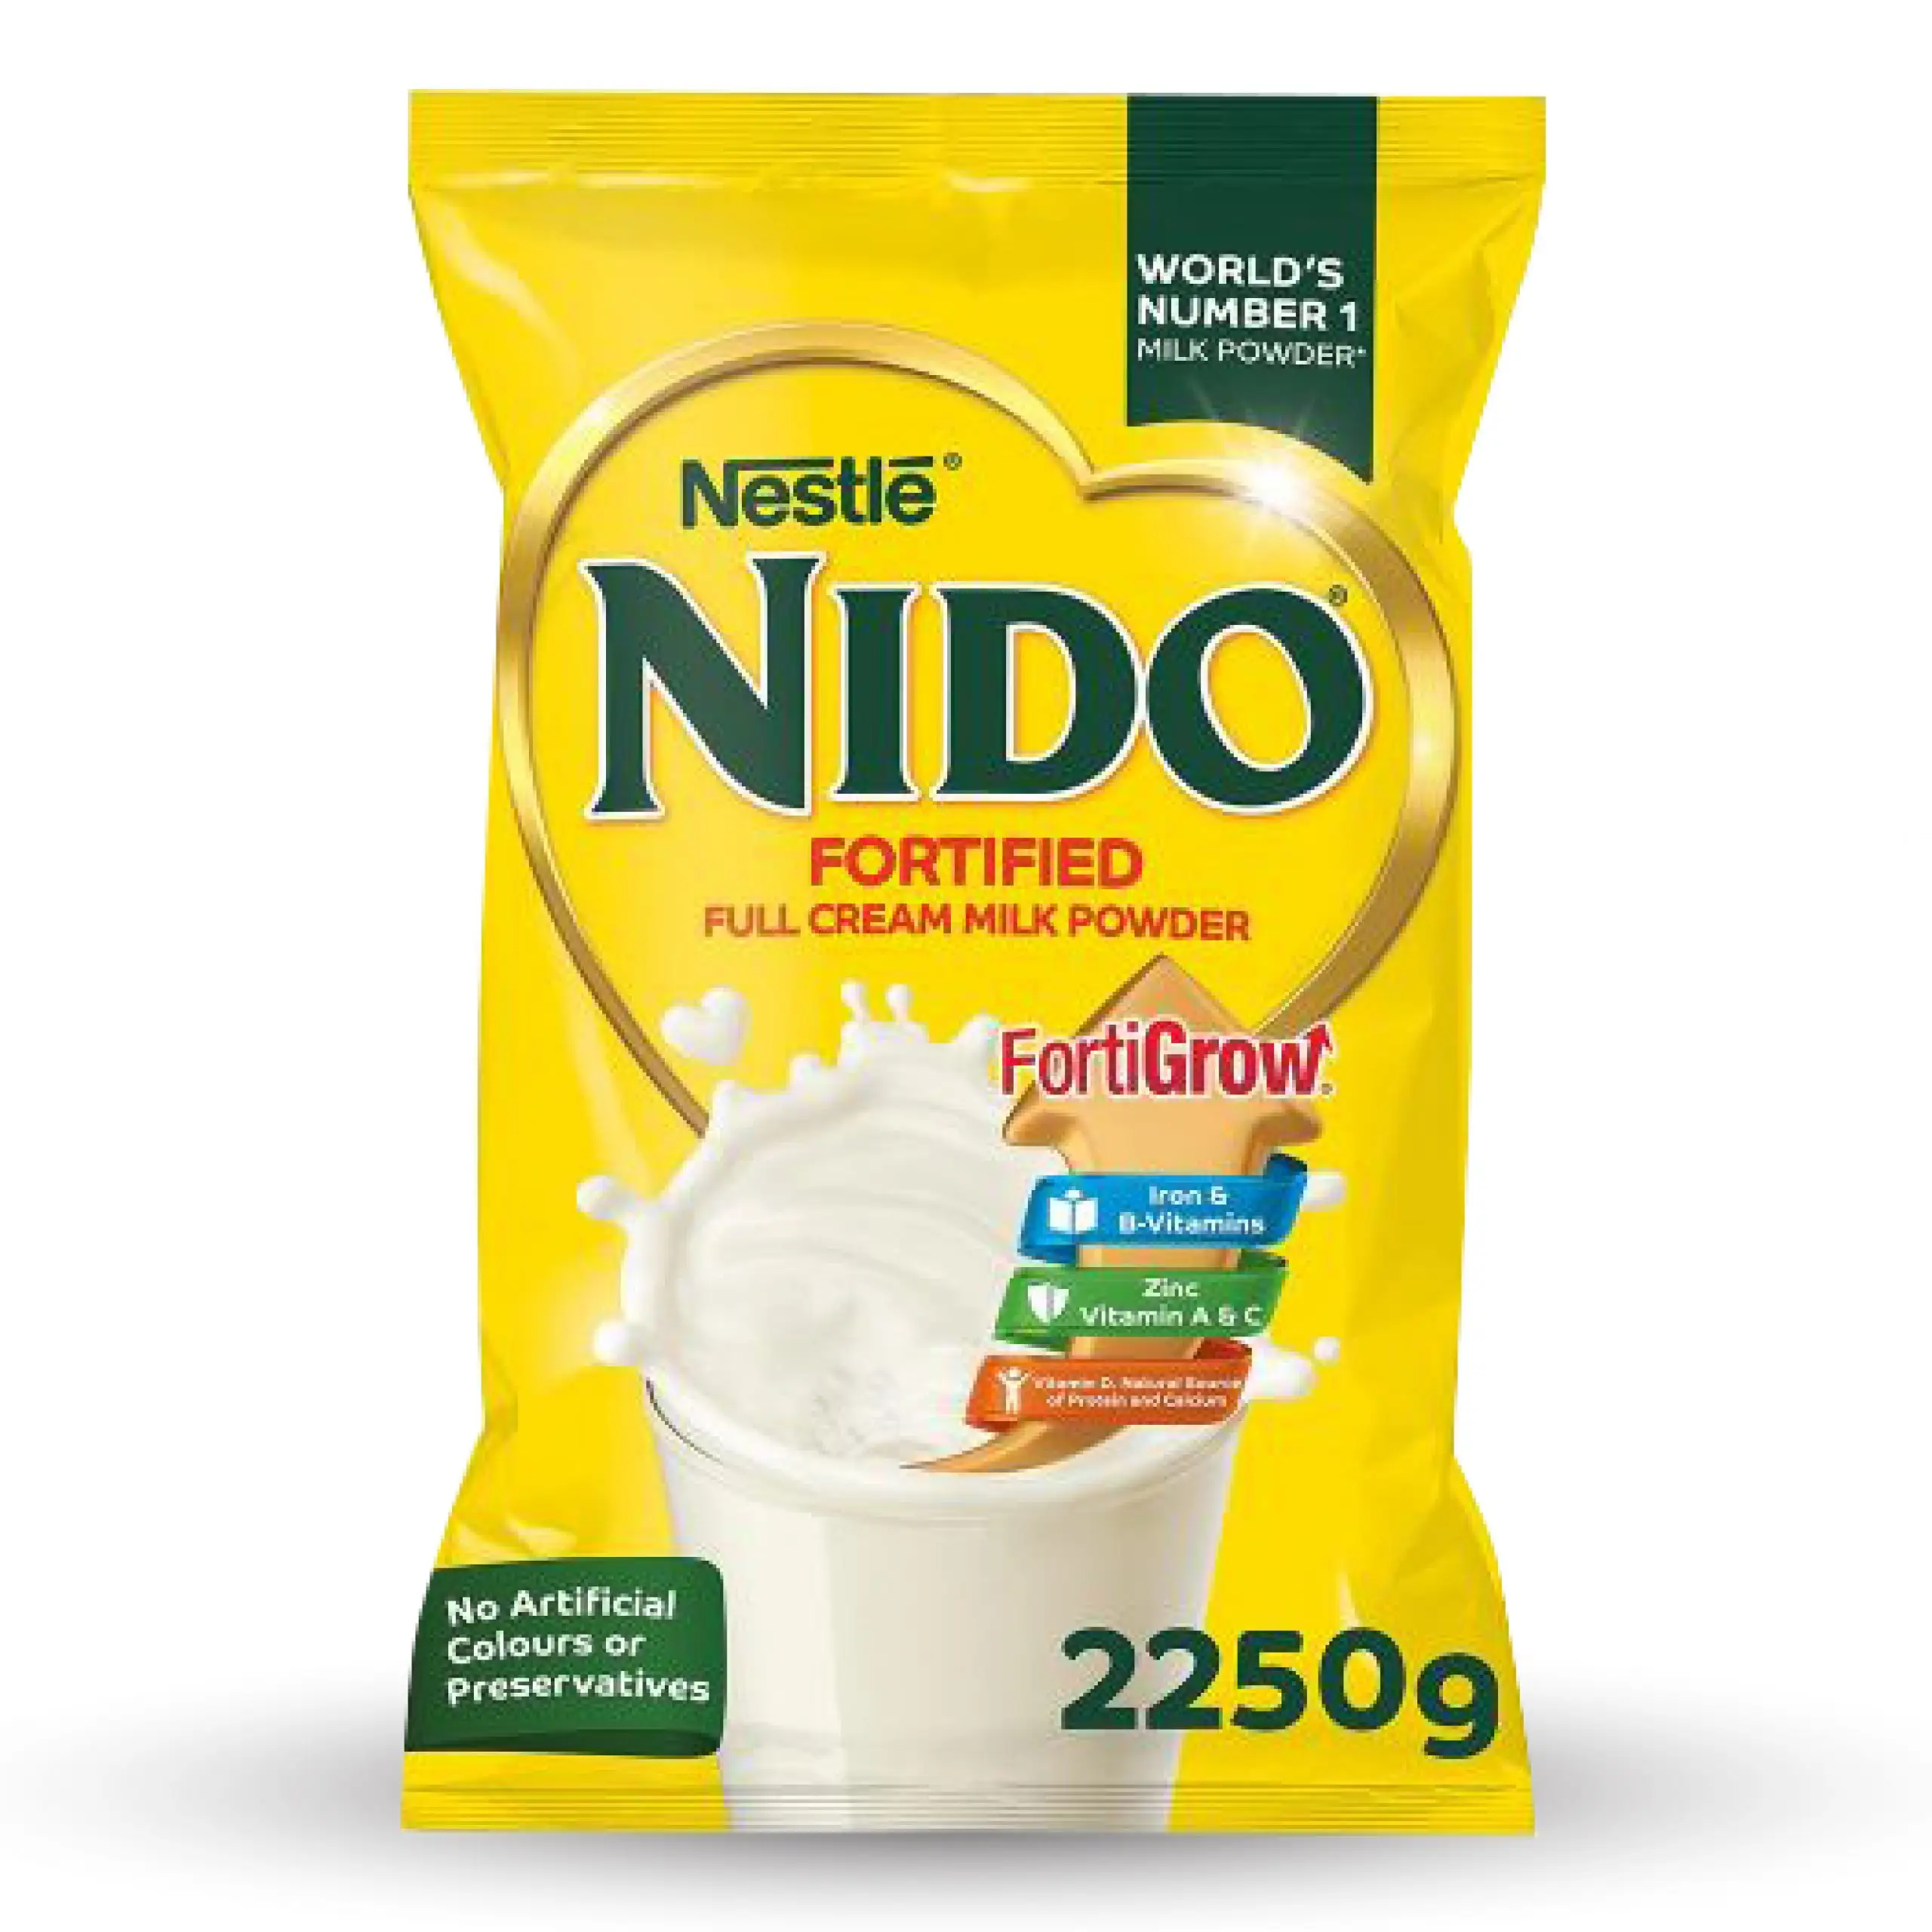 नेस्ले पाउडर Nido दूध तत्काल फुल क्रीम दूध पाउडर के लिए बिक्री